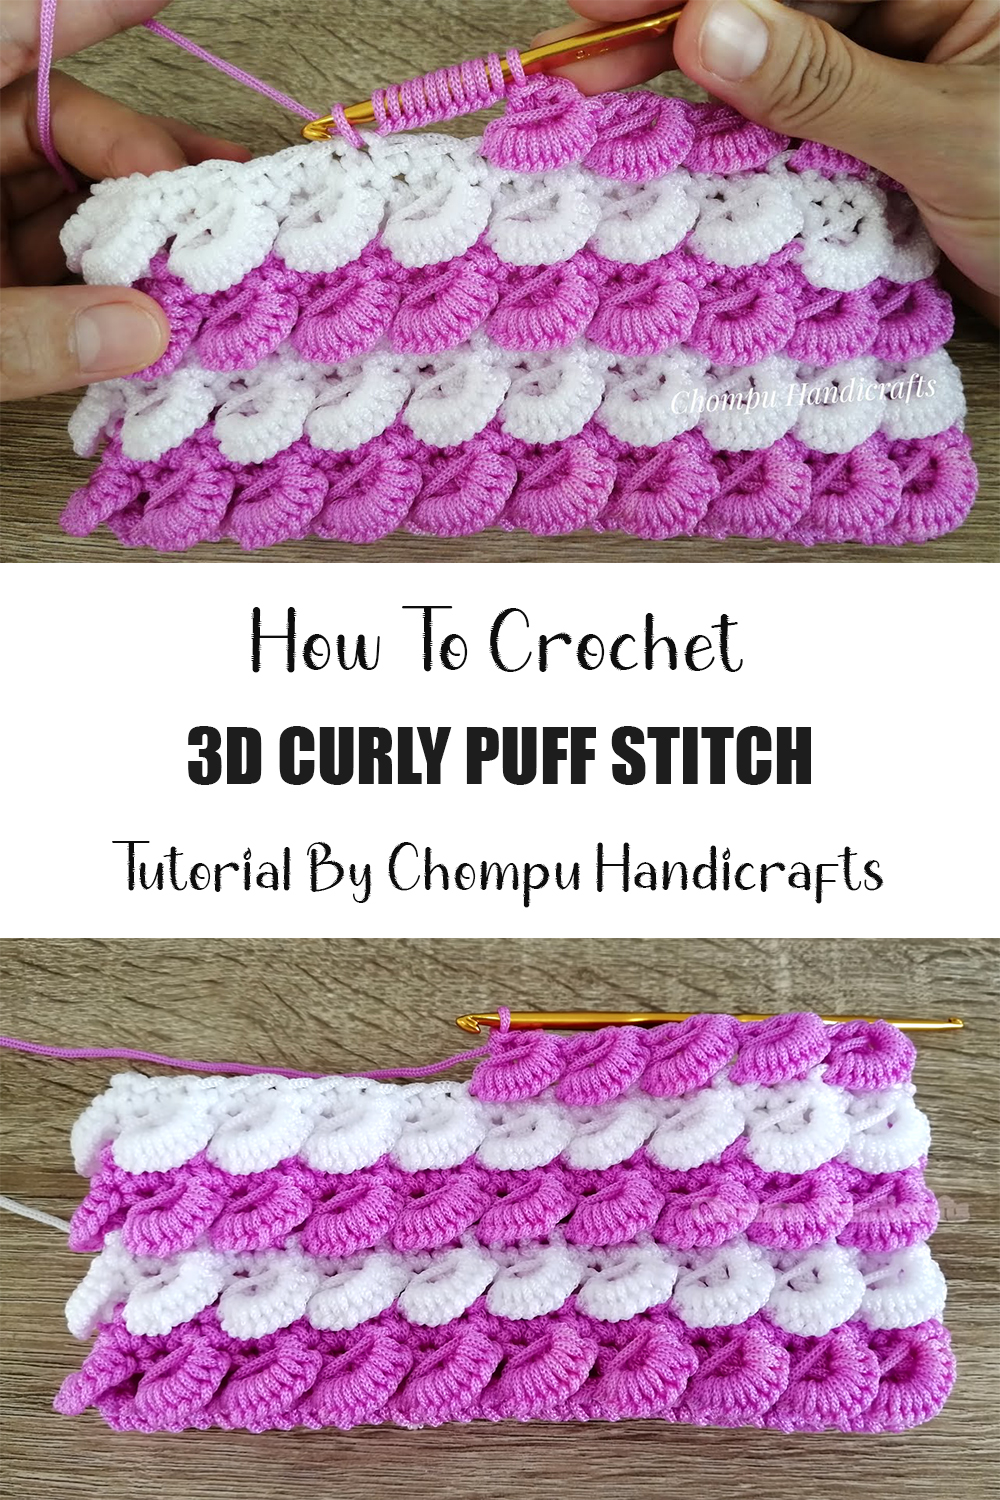 Crochet Curly Puff Stitch